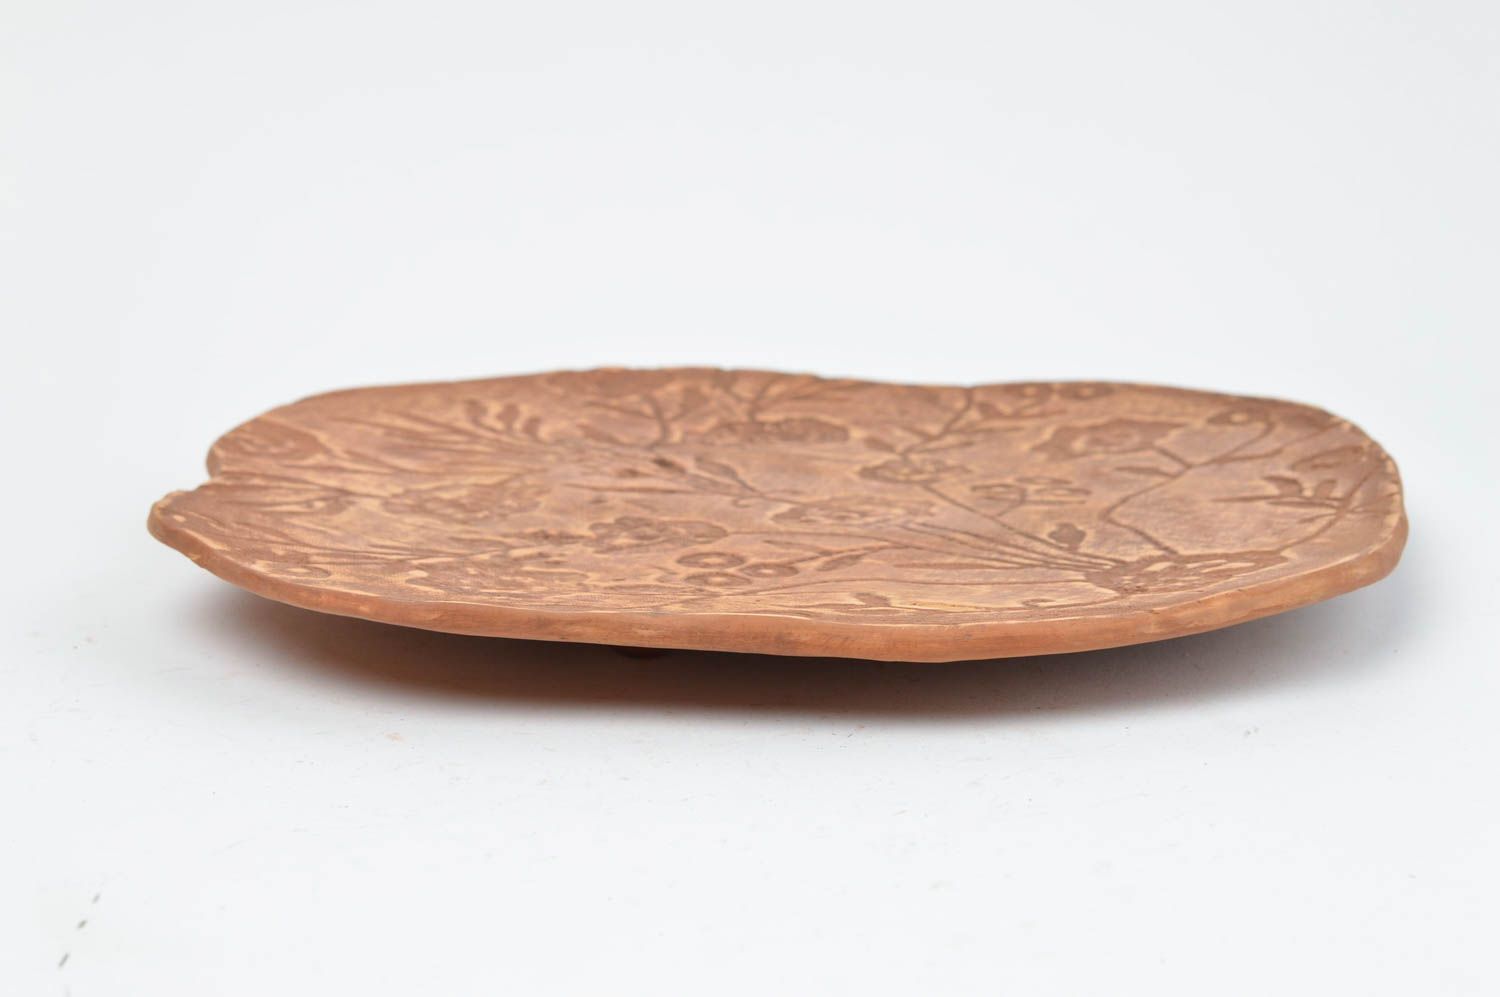 Unusual handmade ceramic plate designer clay plate table setting ideas photo 3